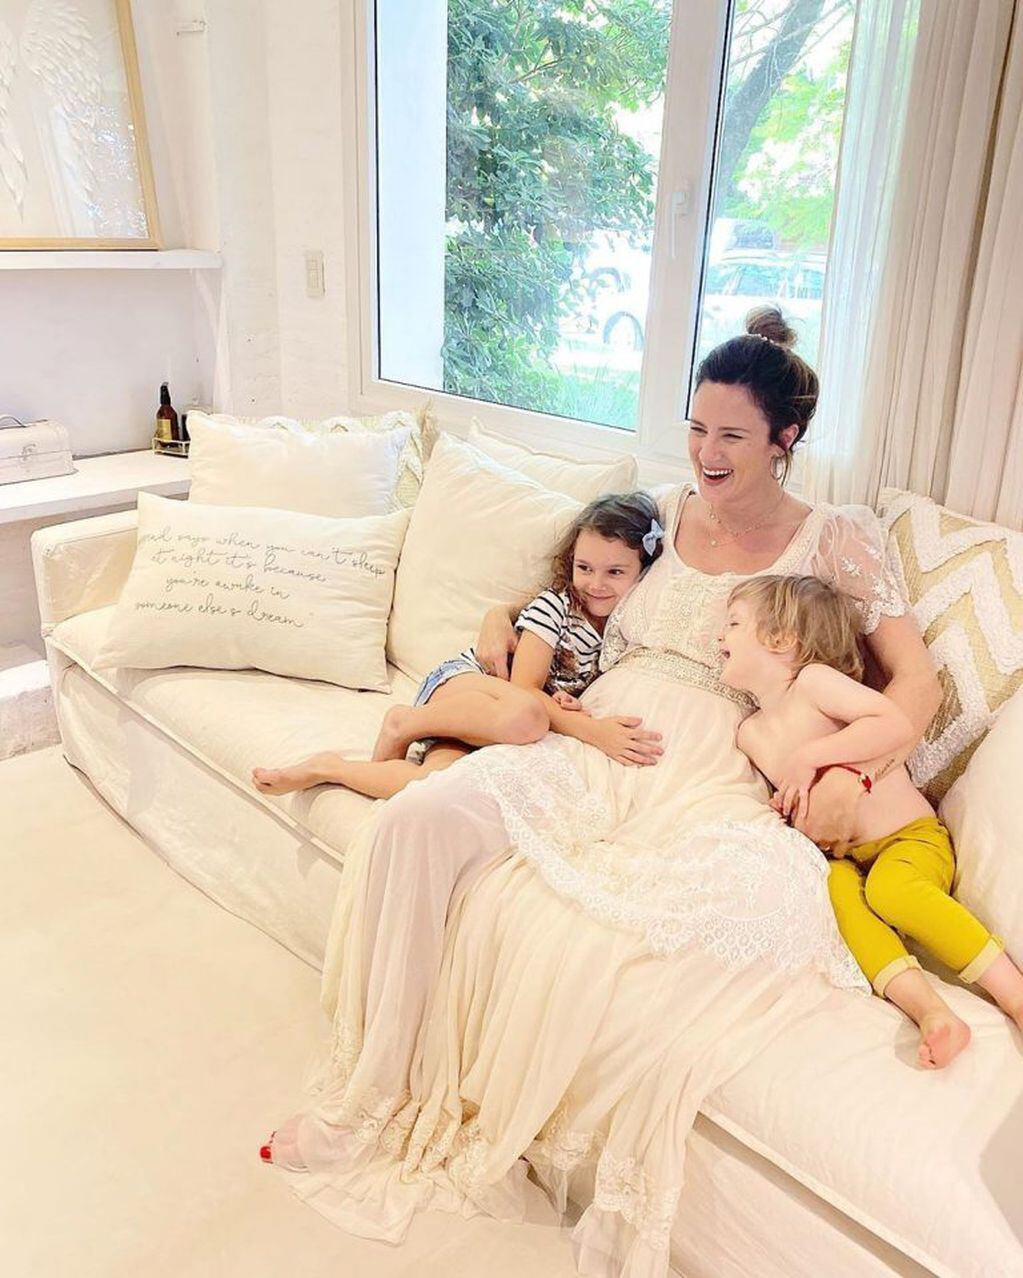 Paula Chaves y sus hijos. (Instagram/@chavespauok)